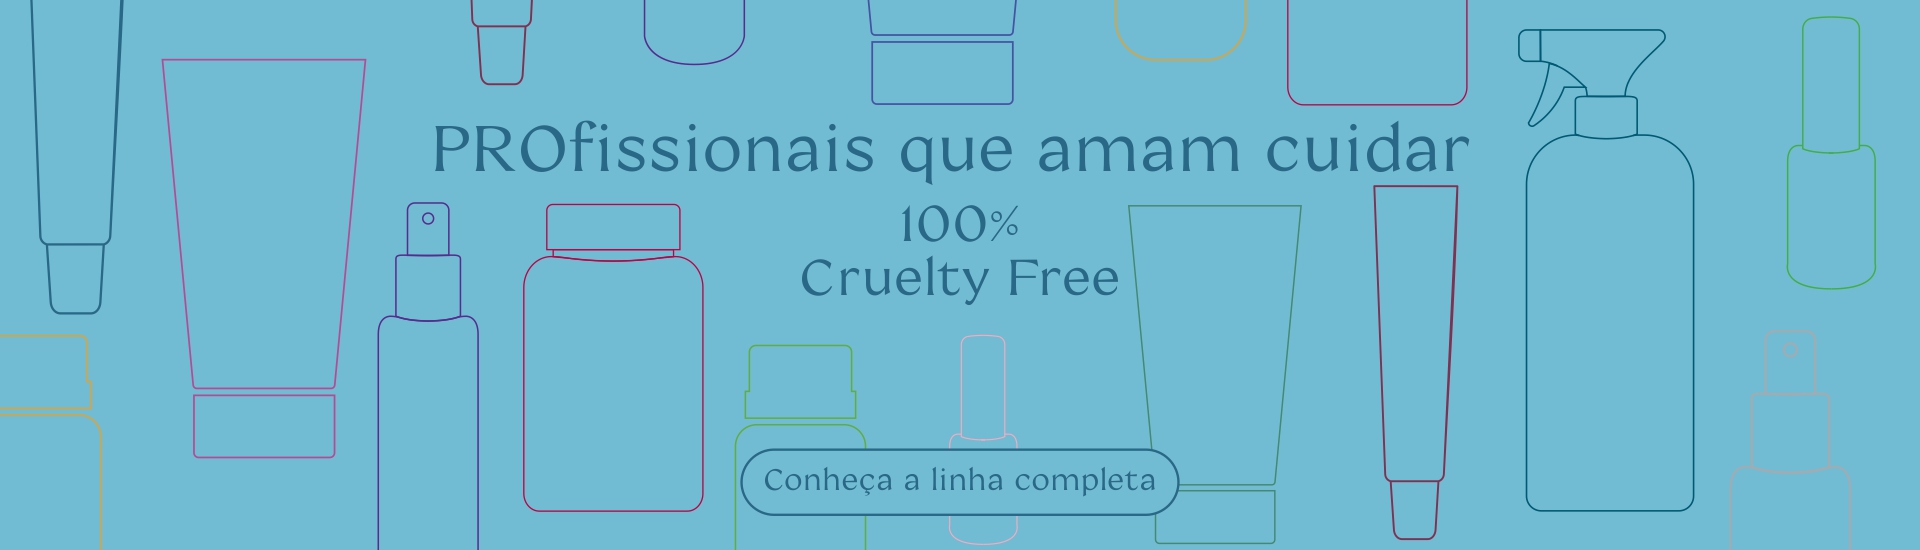 Profissionais que amam cuidar - 100% Cruelty free